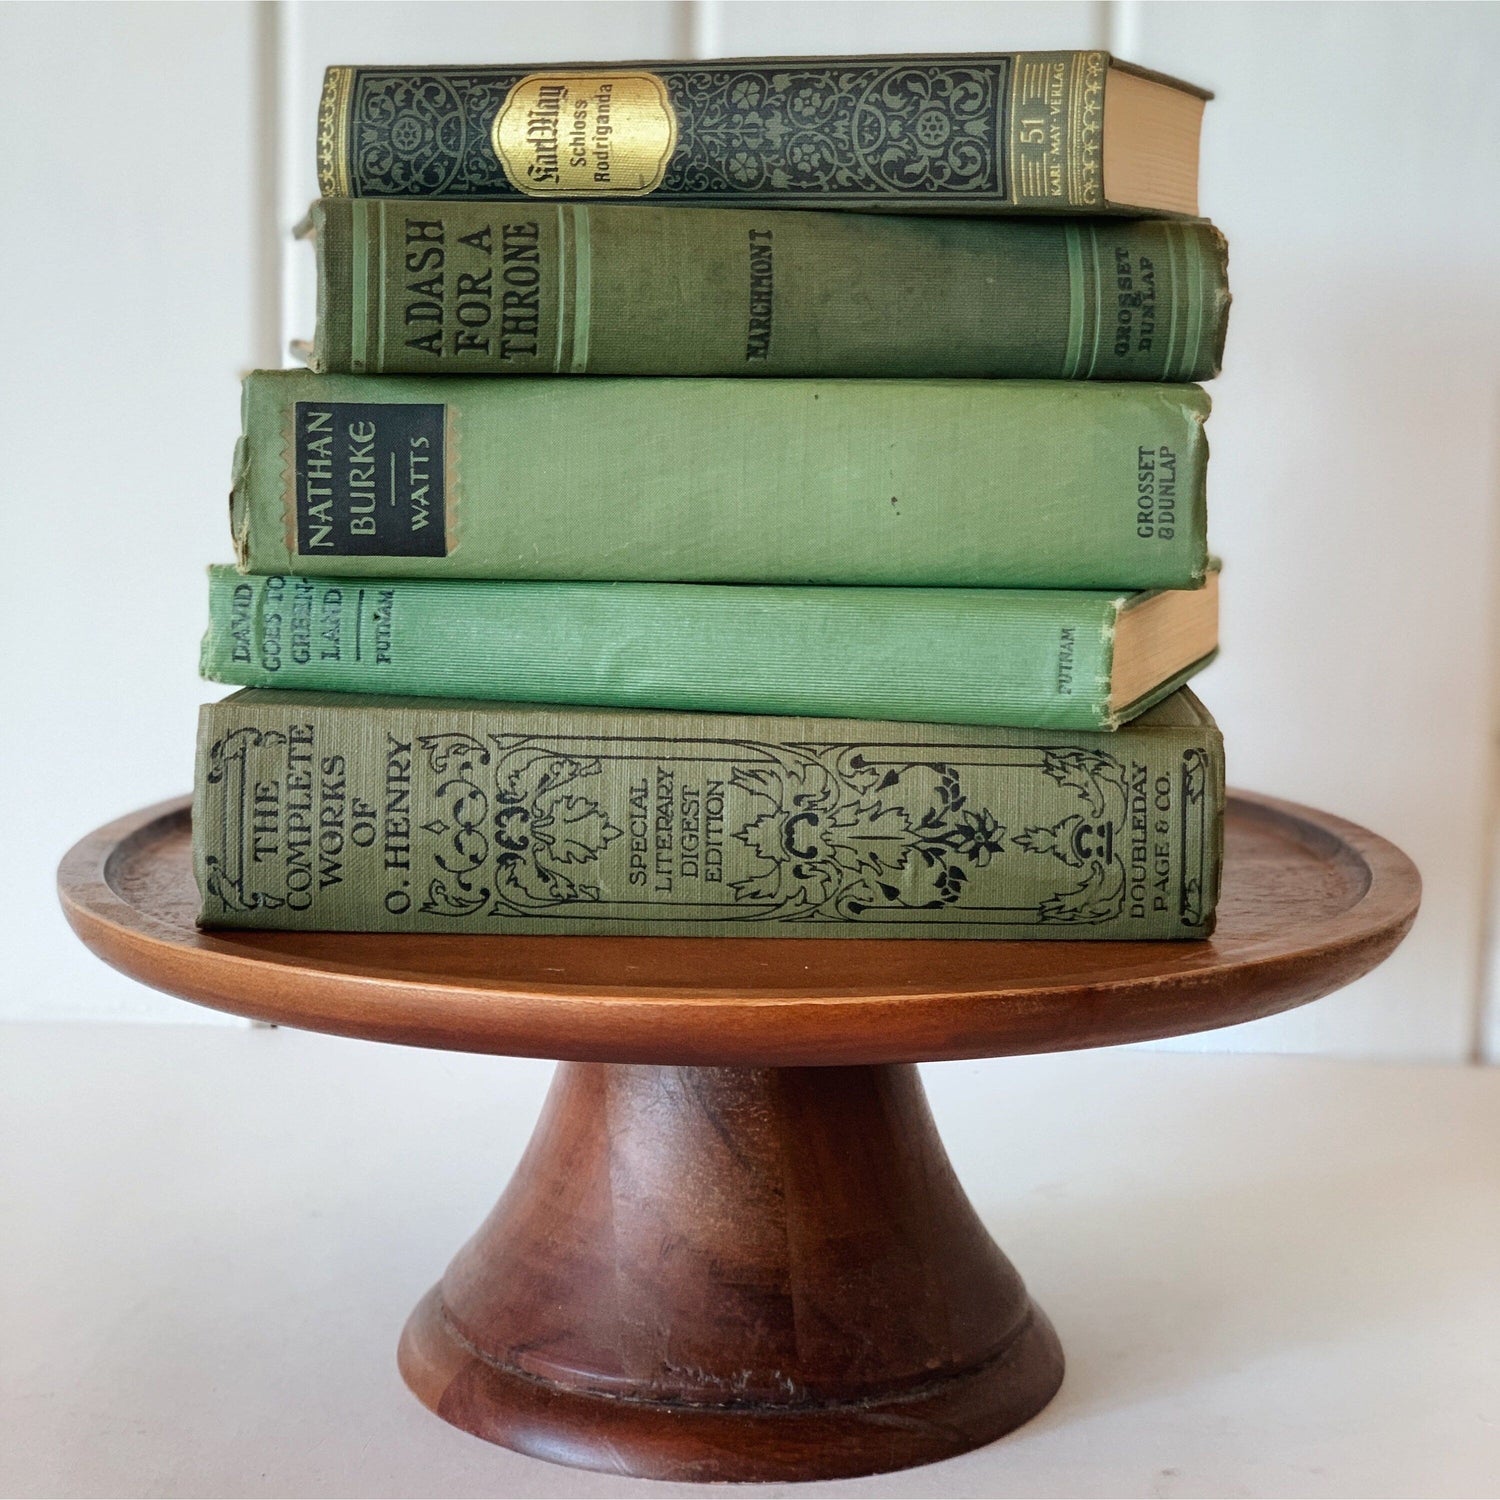 Vintage Olive Green and Black Books for Bookshelf Decor, Vintage Books By Color